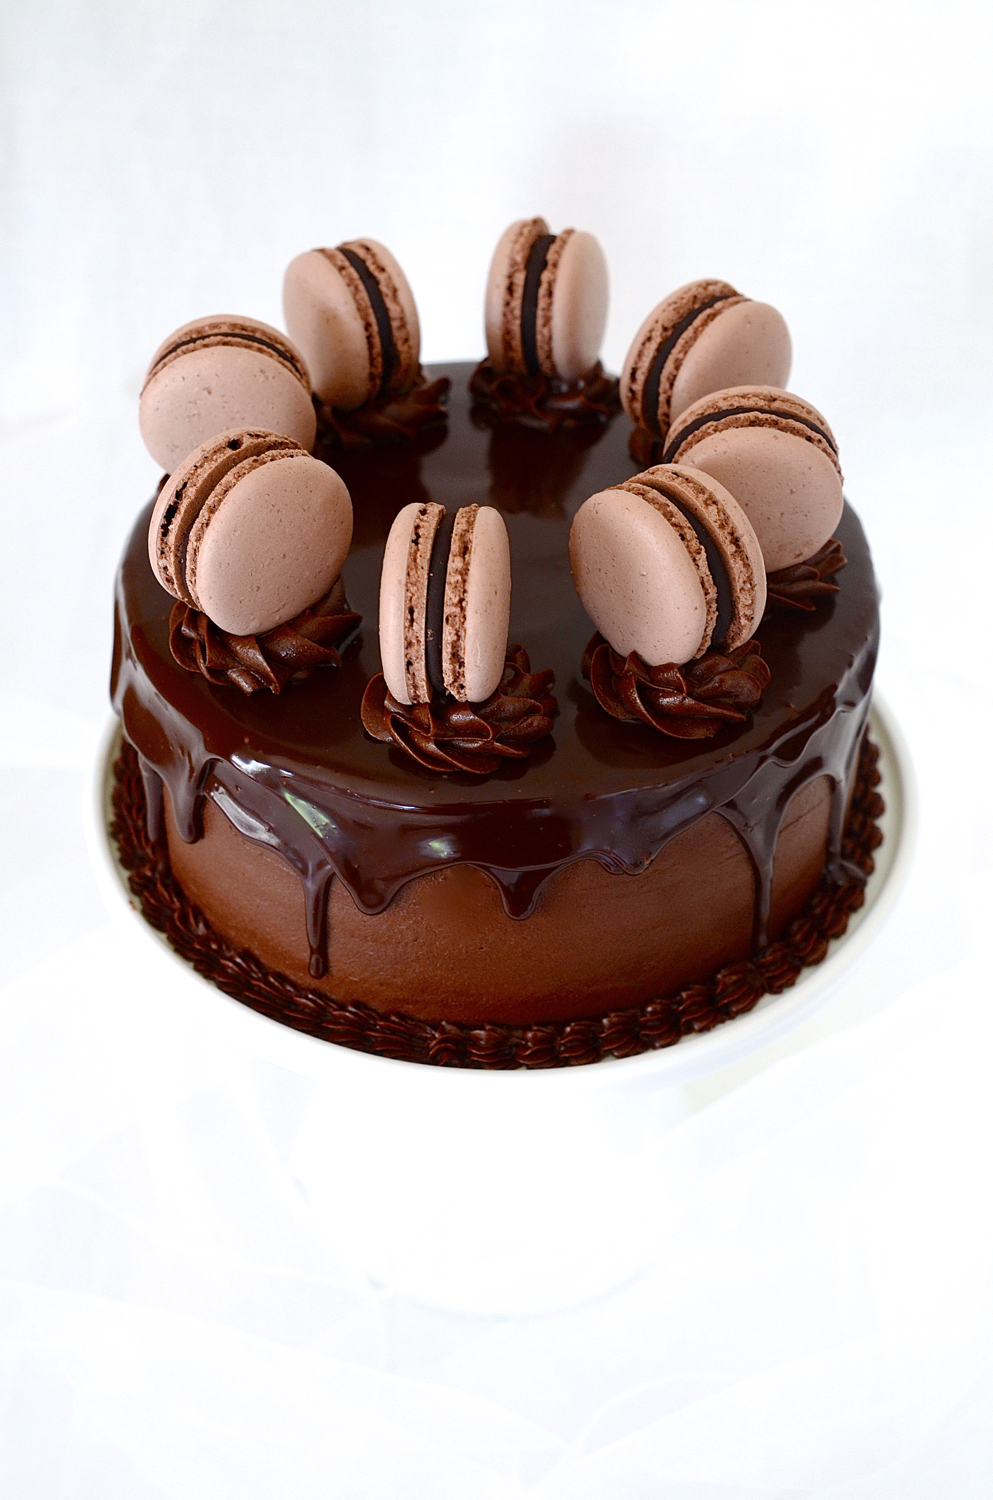 Best Chocolate layer Cake